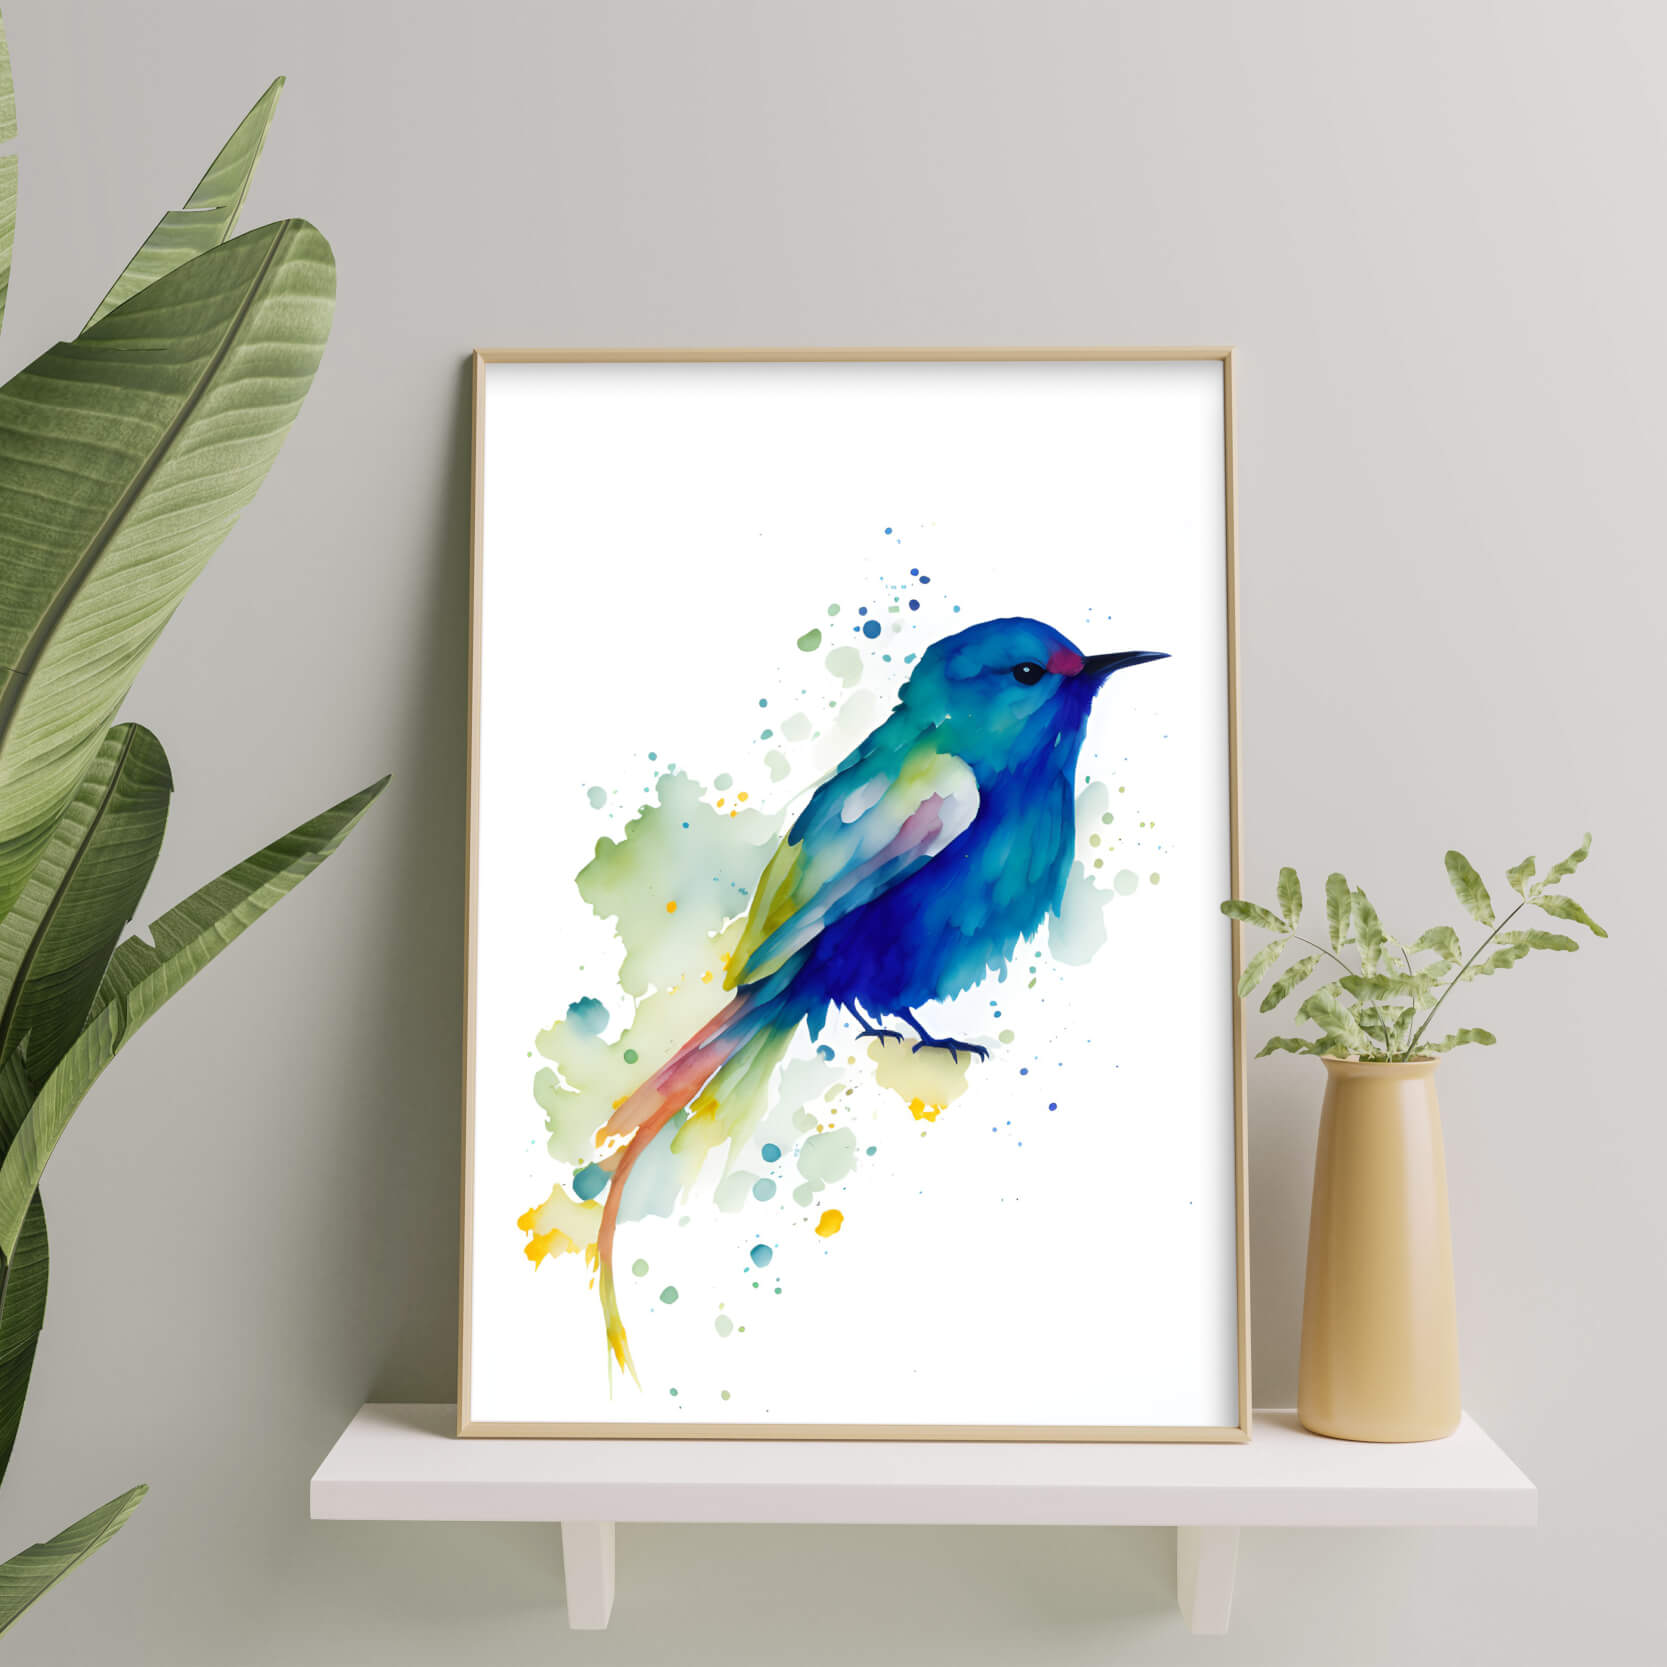 watercolor bluebird